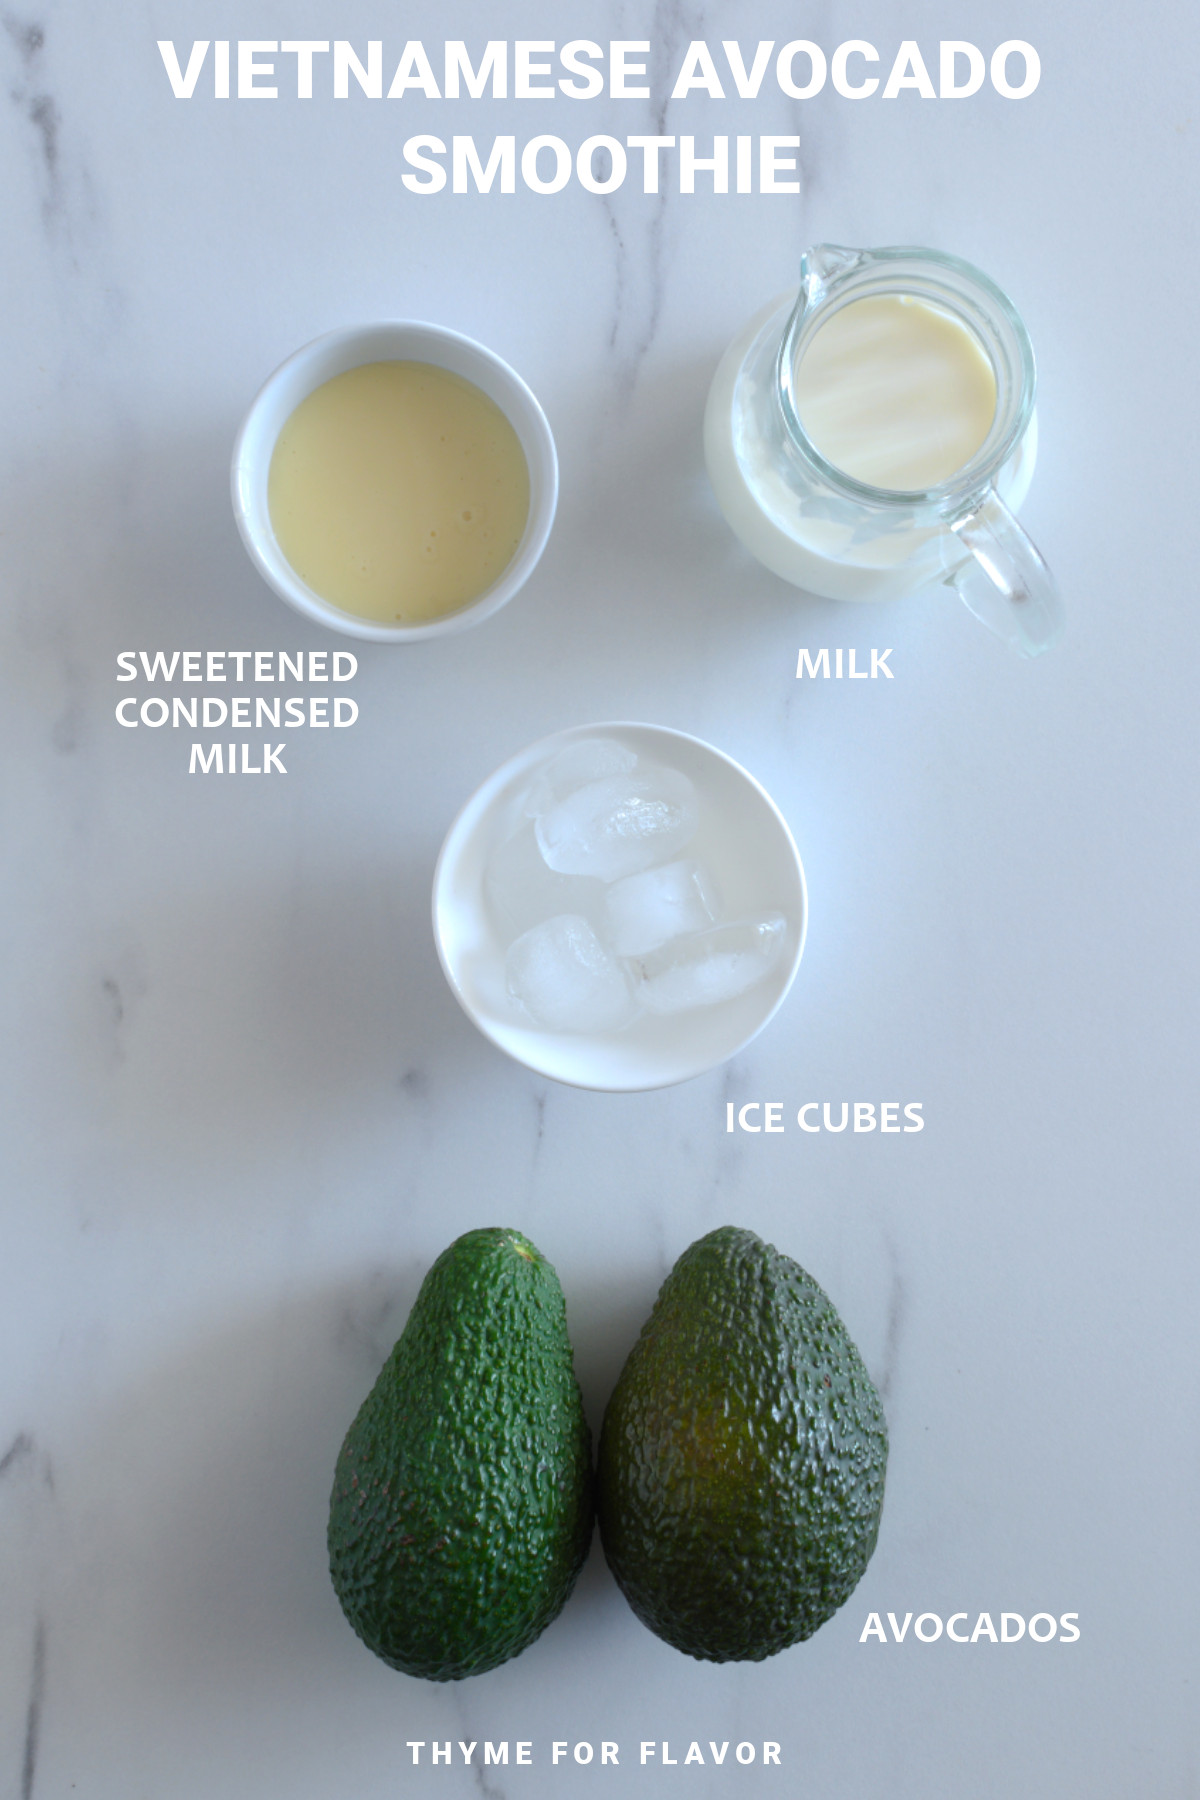 Ingredients for Vietnamese avocado smoothie.